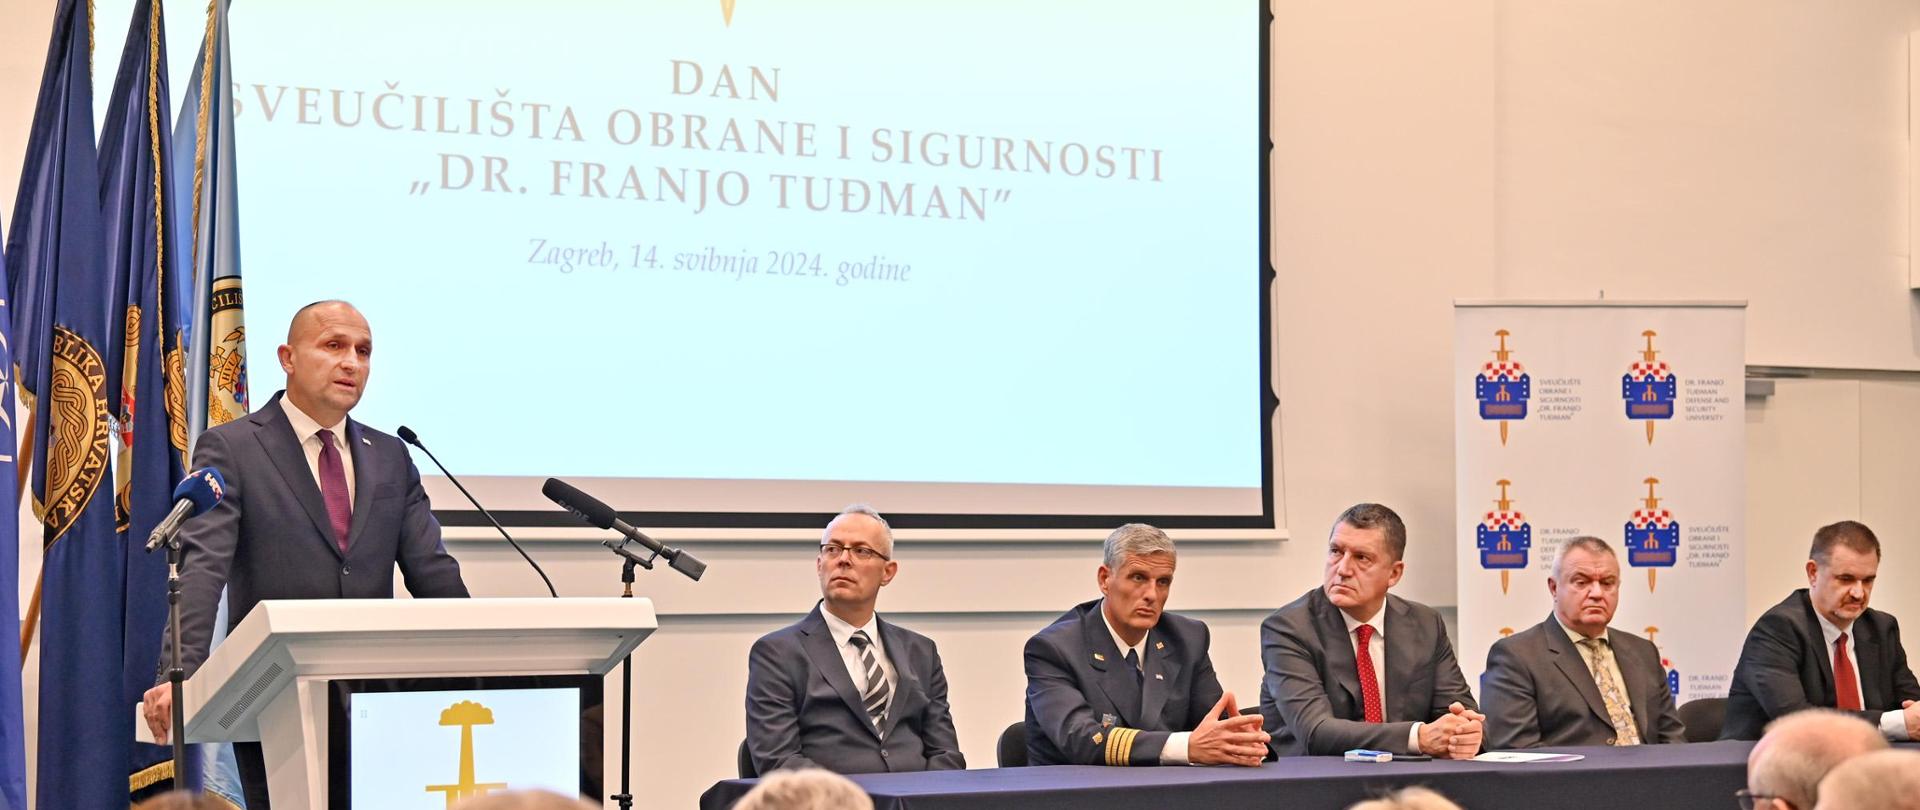 Veleposlanik Paweł Czerwiński sudjelovao je na svečanom obilježavanju Dana Sveučilišta obrane i sigurnosti „Dr. Franjo Tuđman“